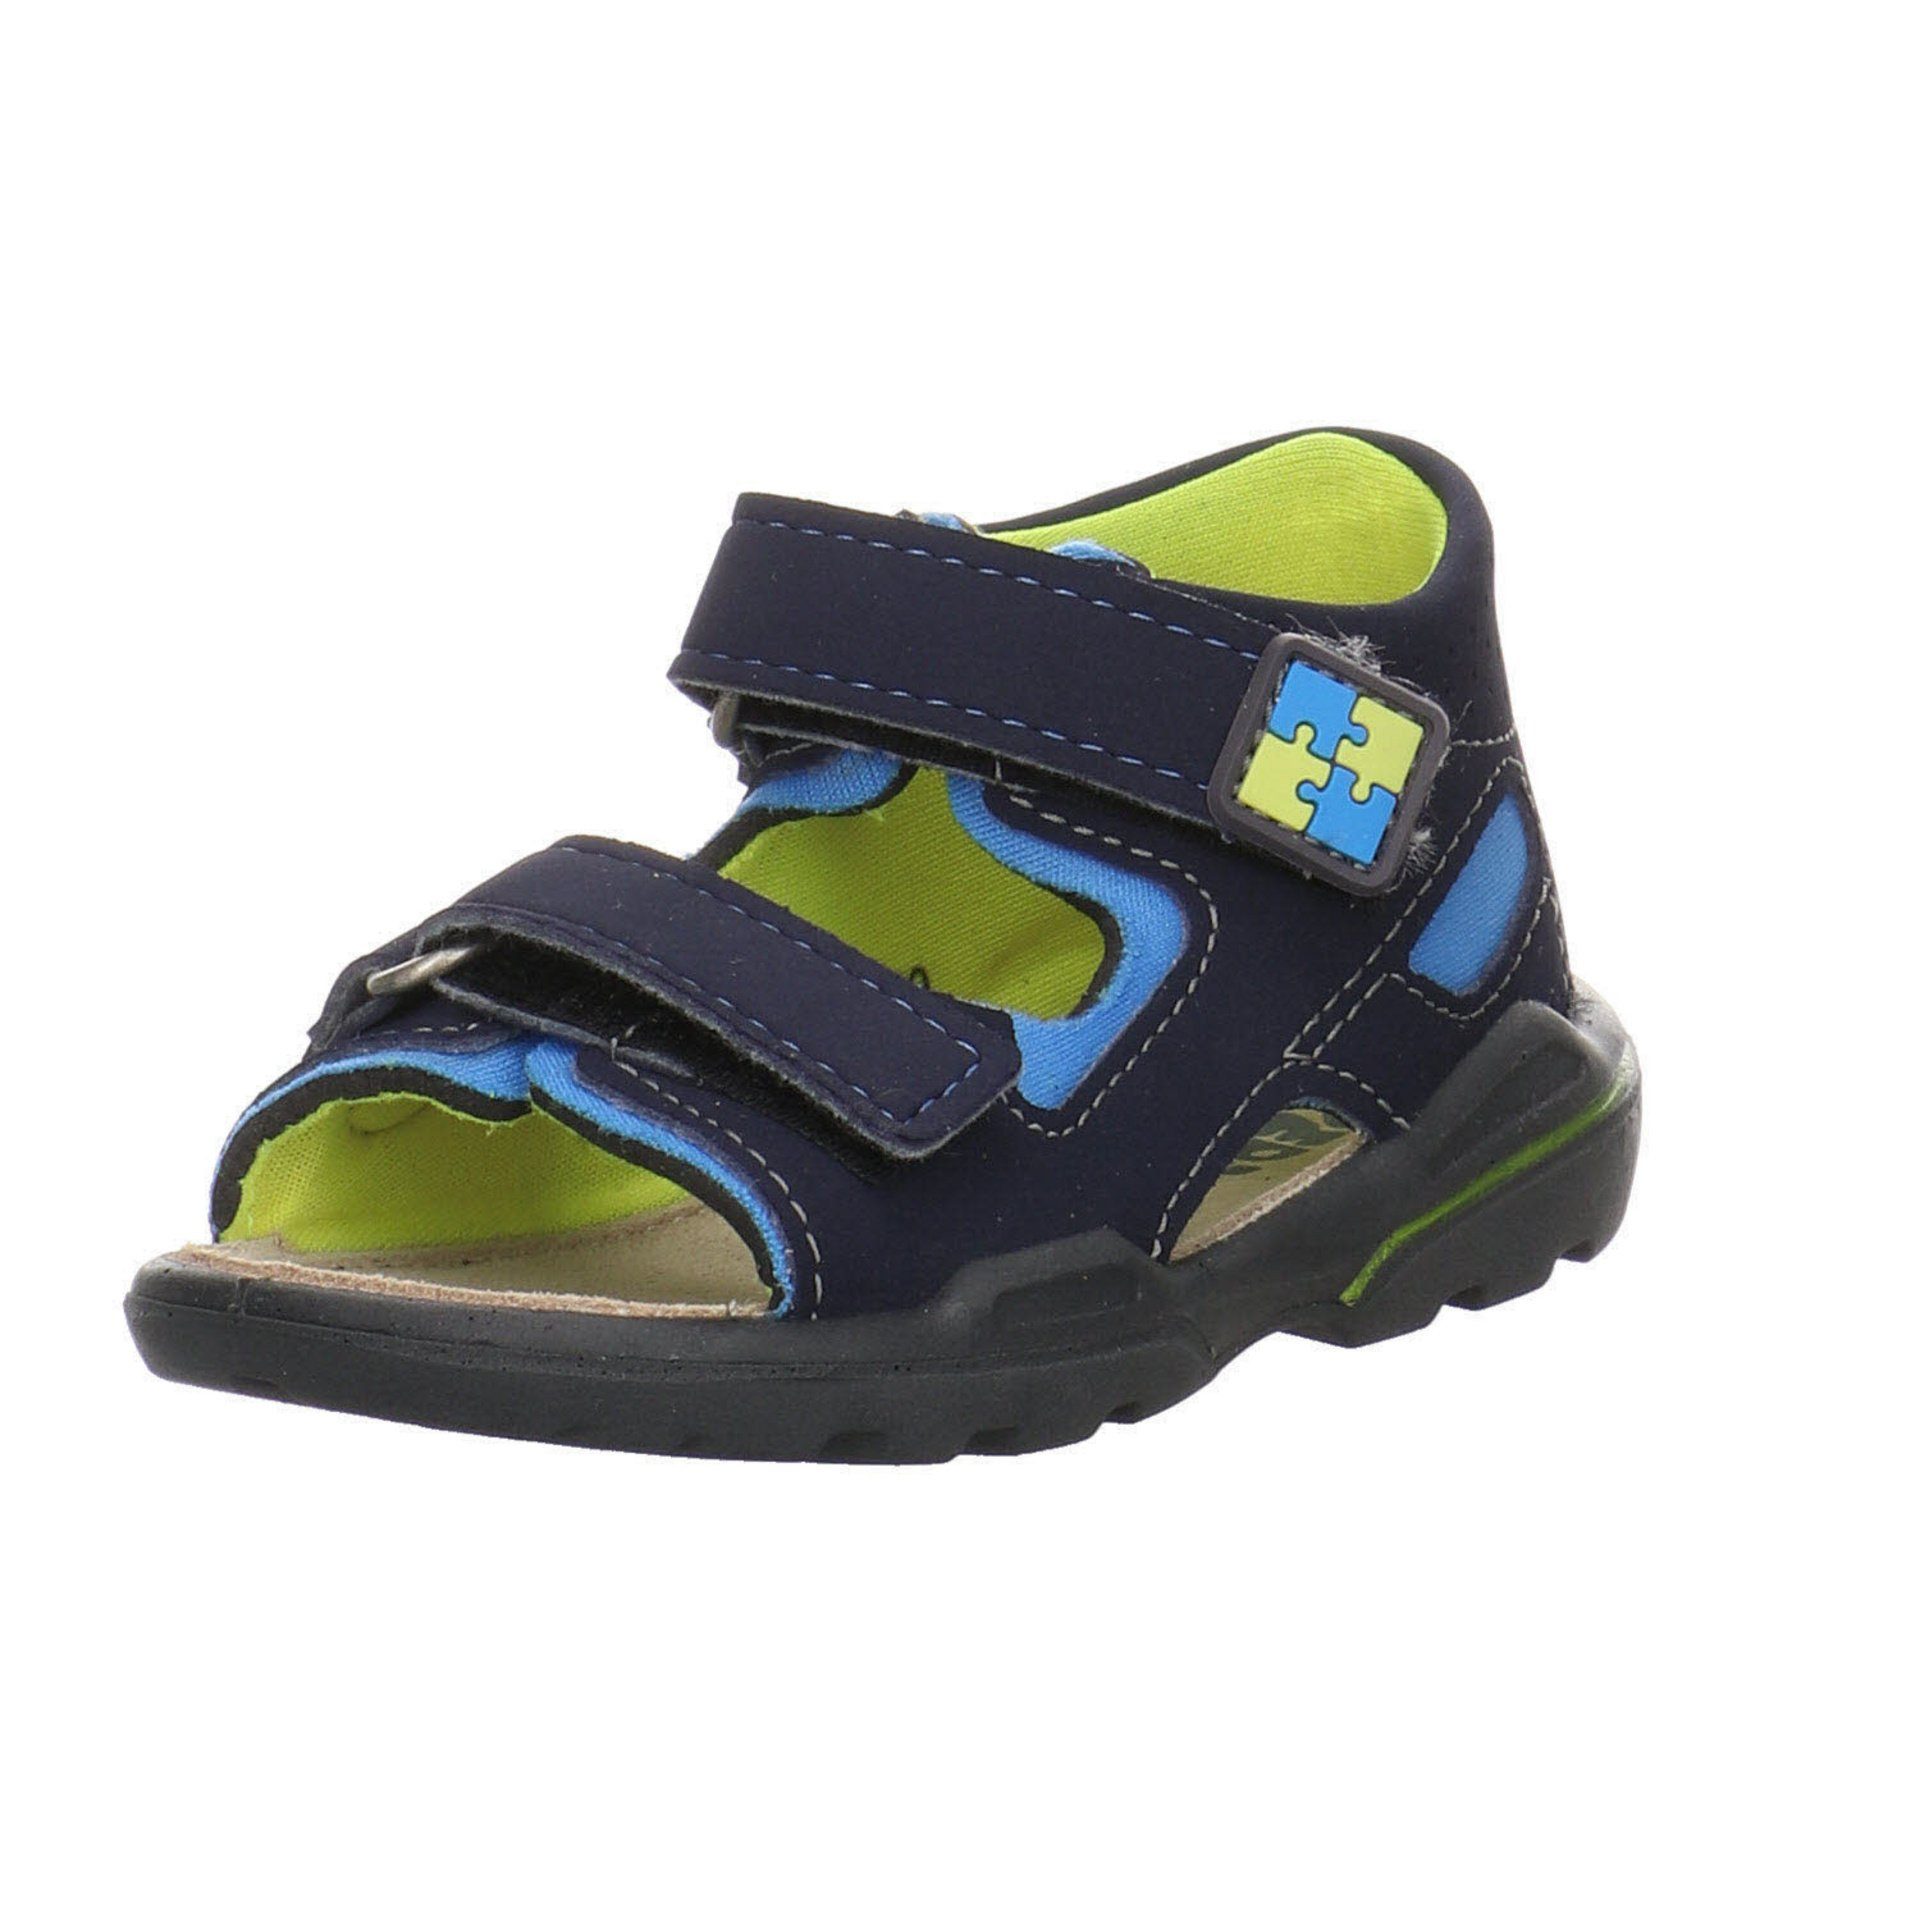 Ricosta »Jungen Sandalen Schuhe Pepino Manto Sandale« Sandale  Synthetikkombination online kaufen | OTTO